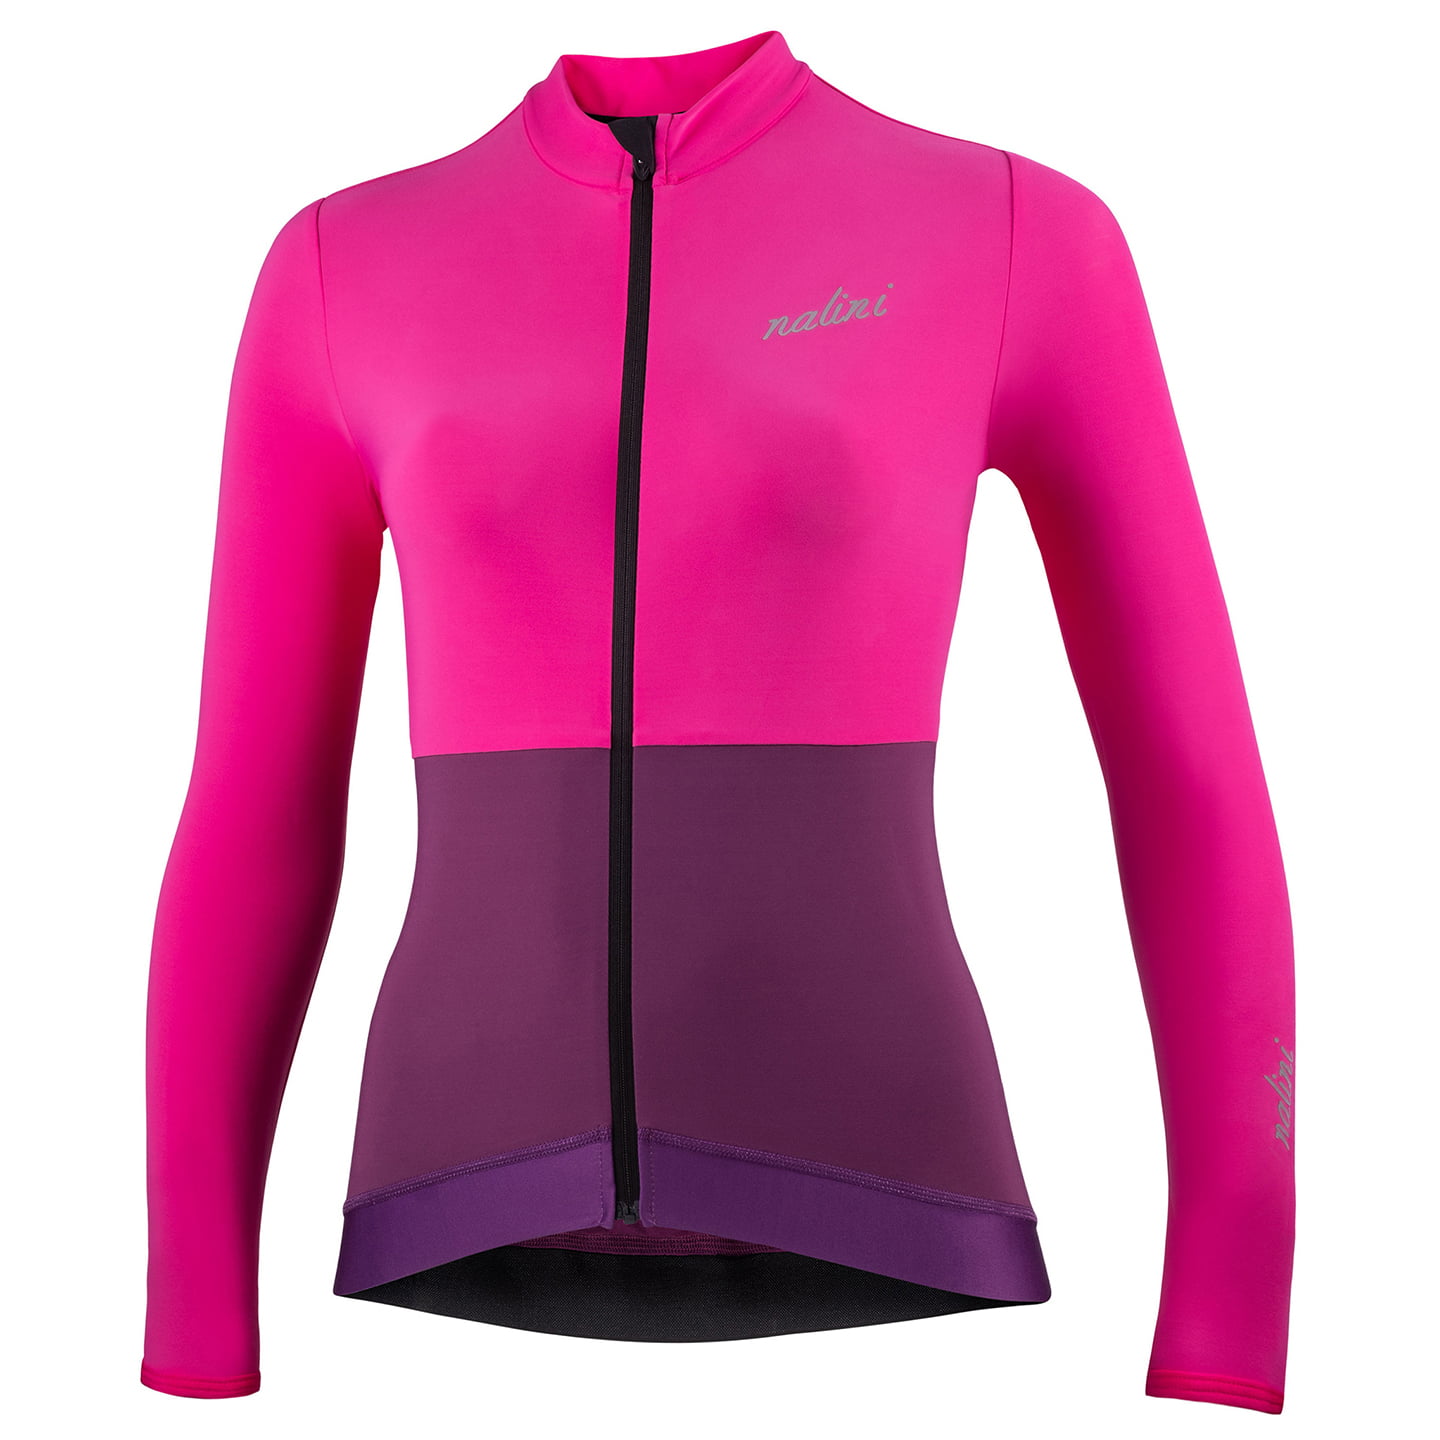 NALINI Warm Wrap Women’s Long Sleeve Jersey, size S, Cycling jersey, Cycle gear